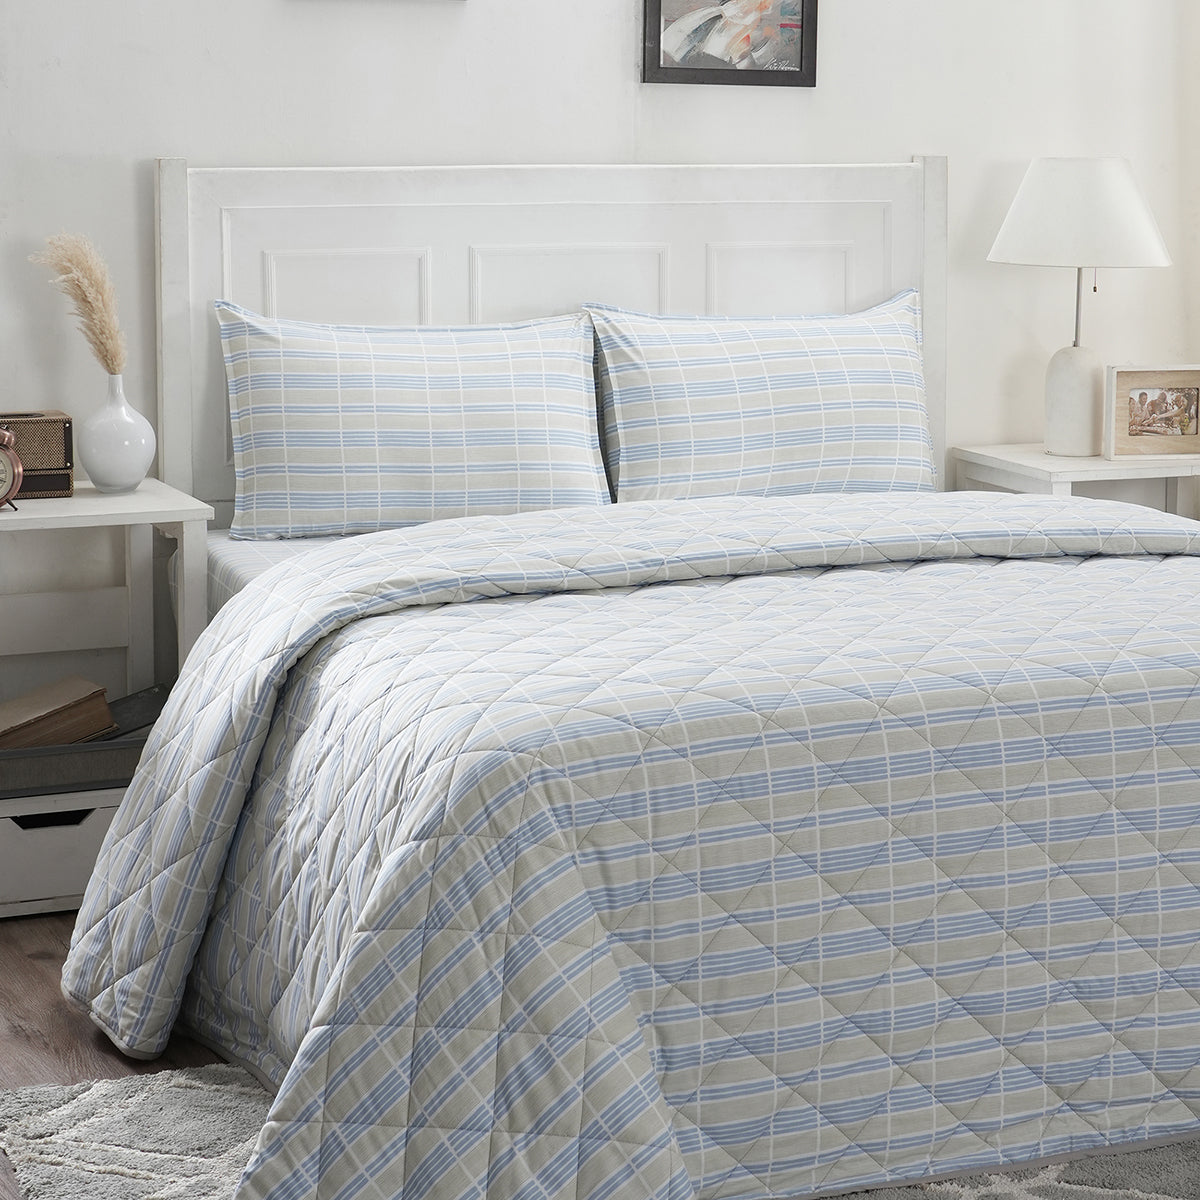 Optimist Bloom Berne 4PC Quilt/Quilted Bed Cover Set